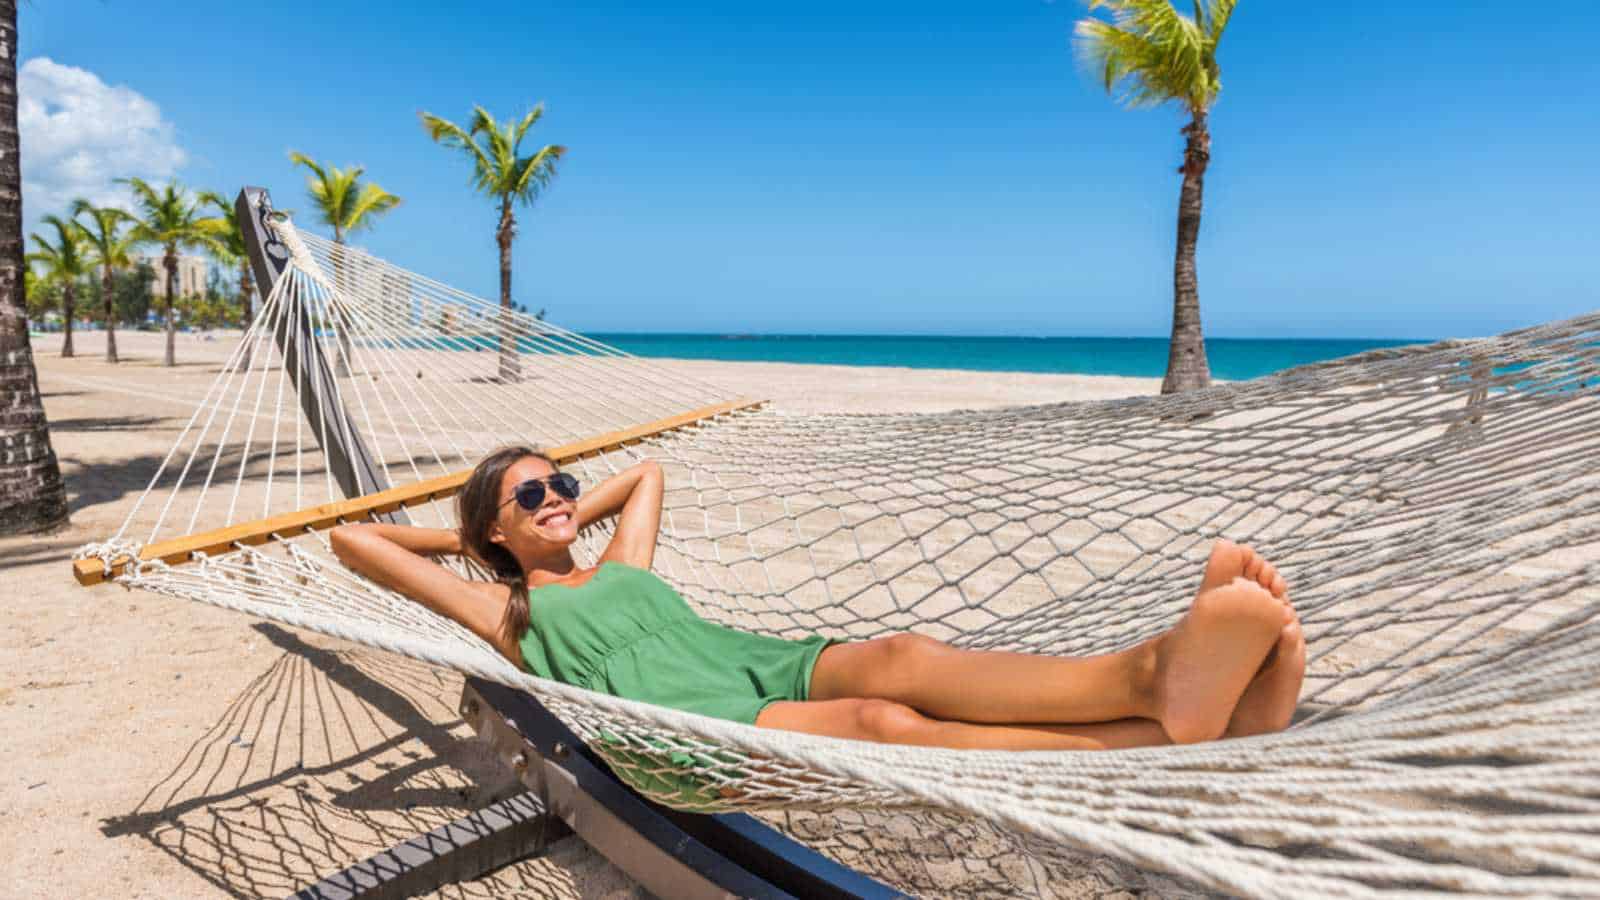 Woman relaxing in beach